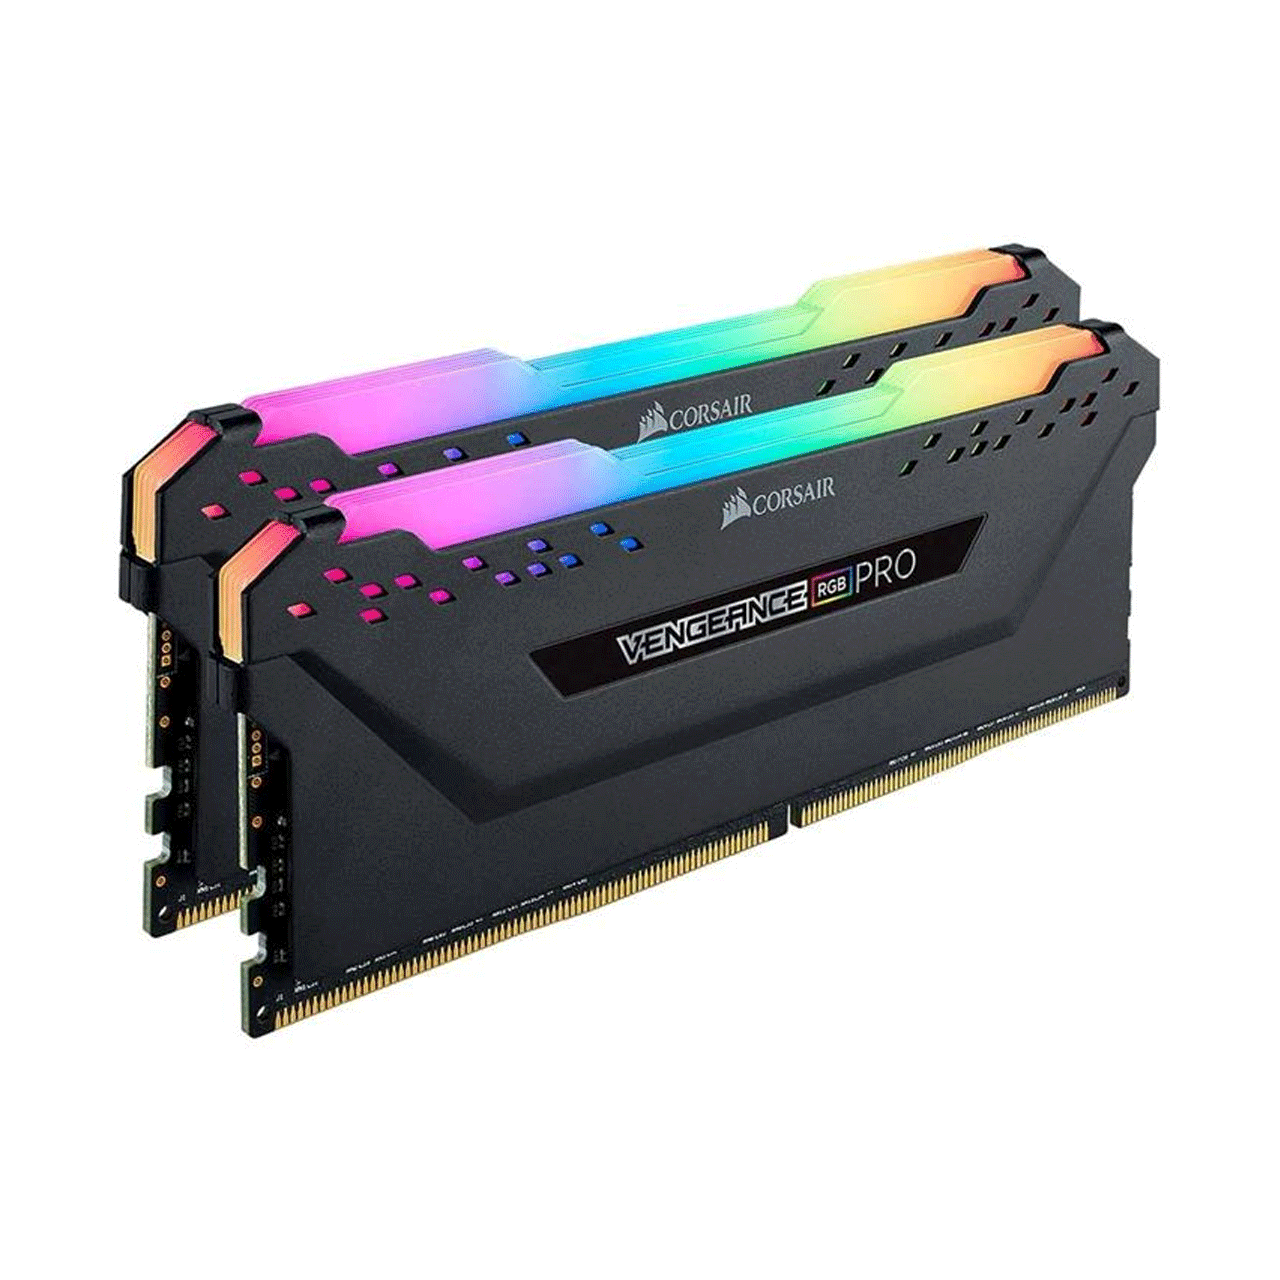 Corsair-VENGEANCE-RGB-PRO-32GB-16GBx2-3200MHz-CL16-Memory